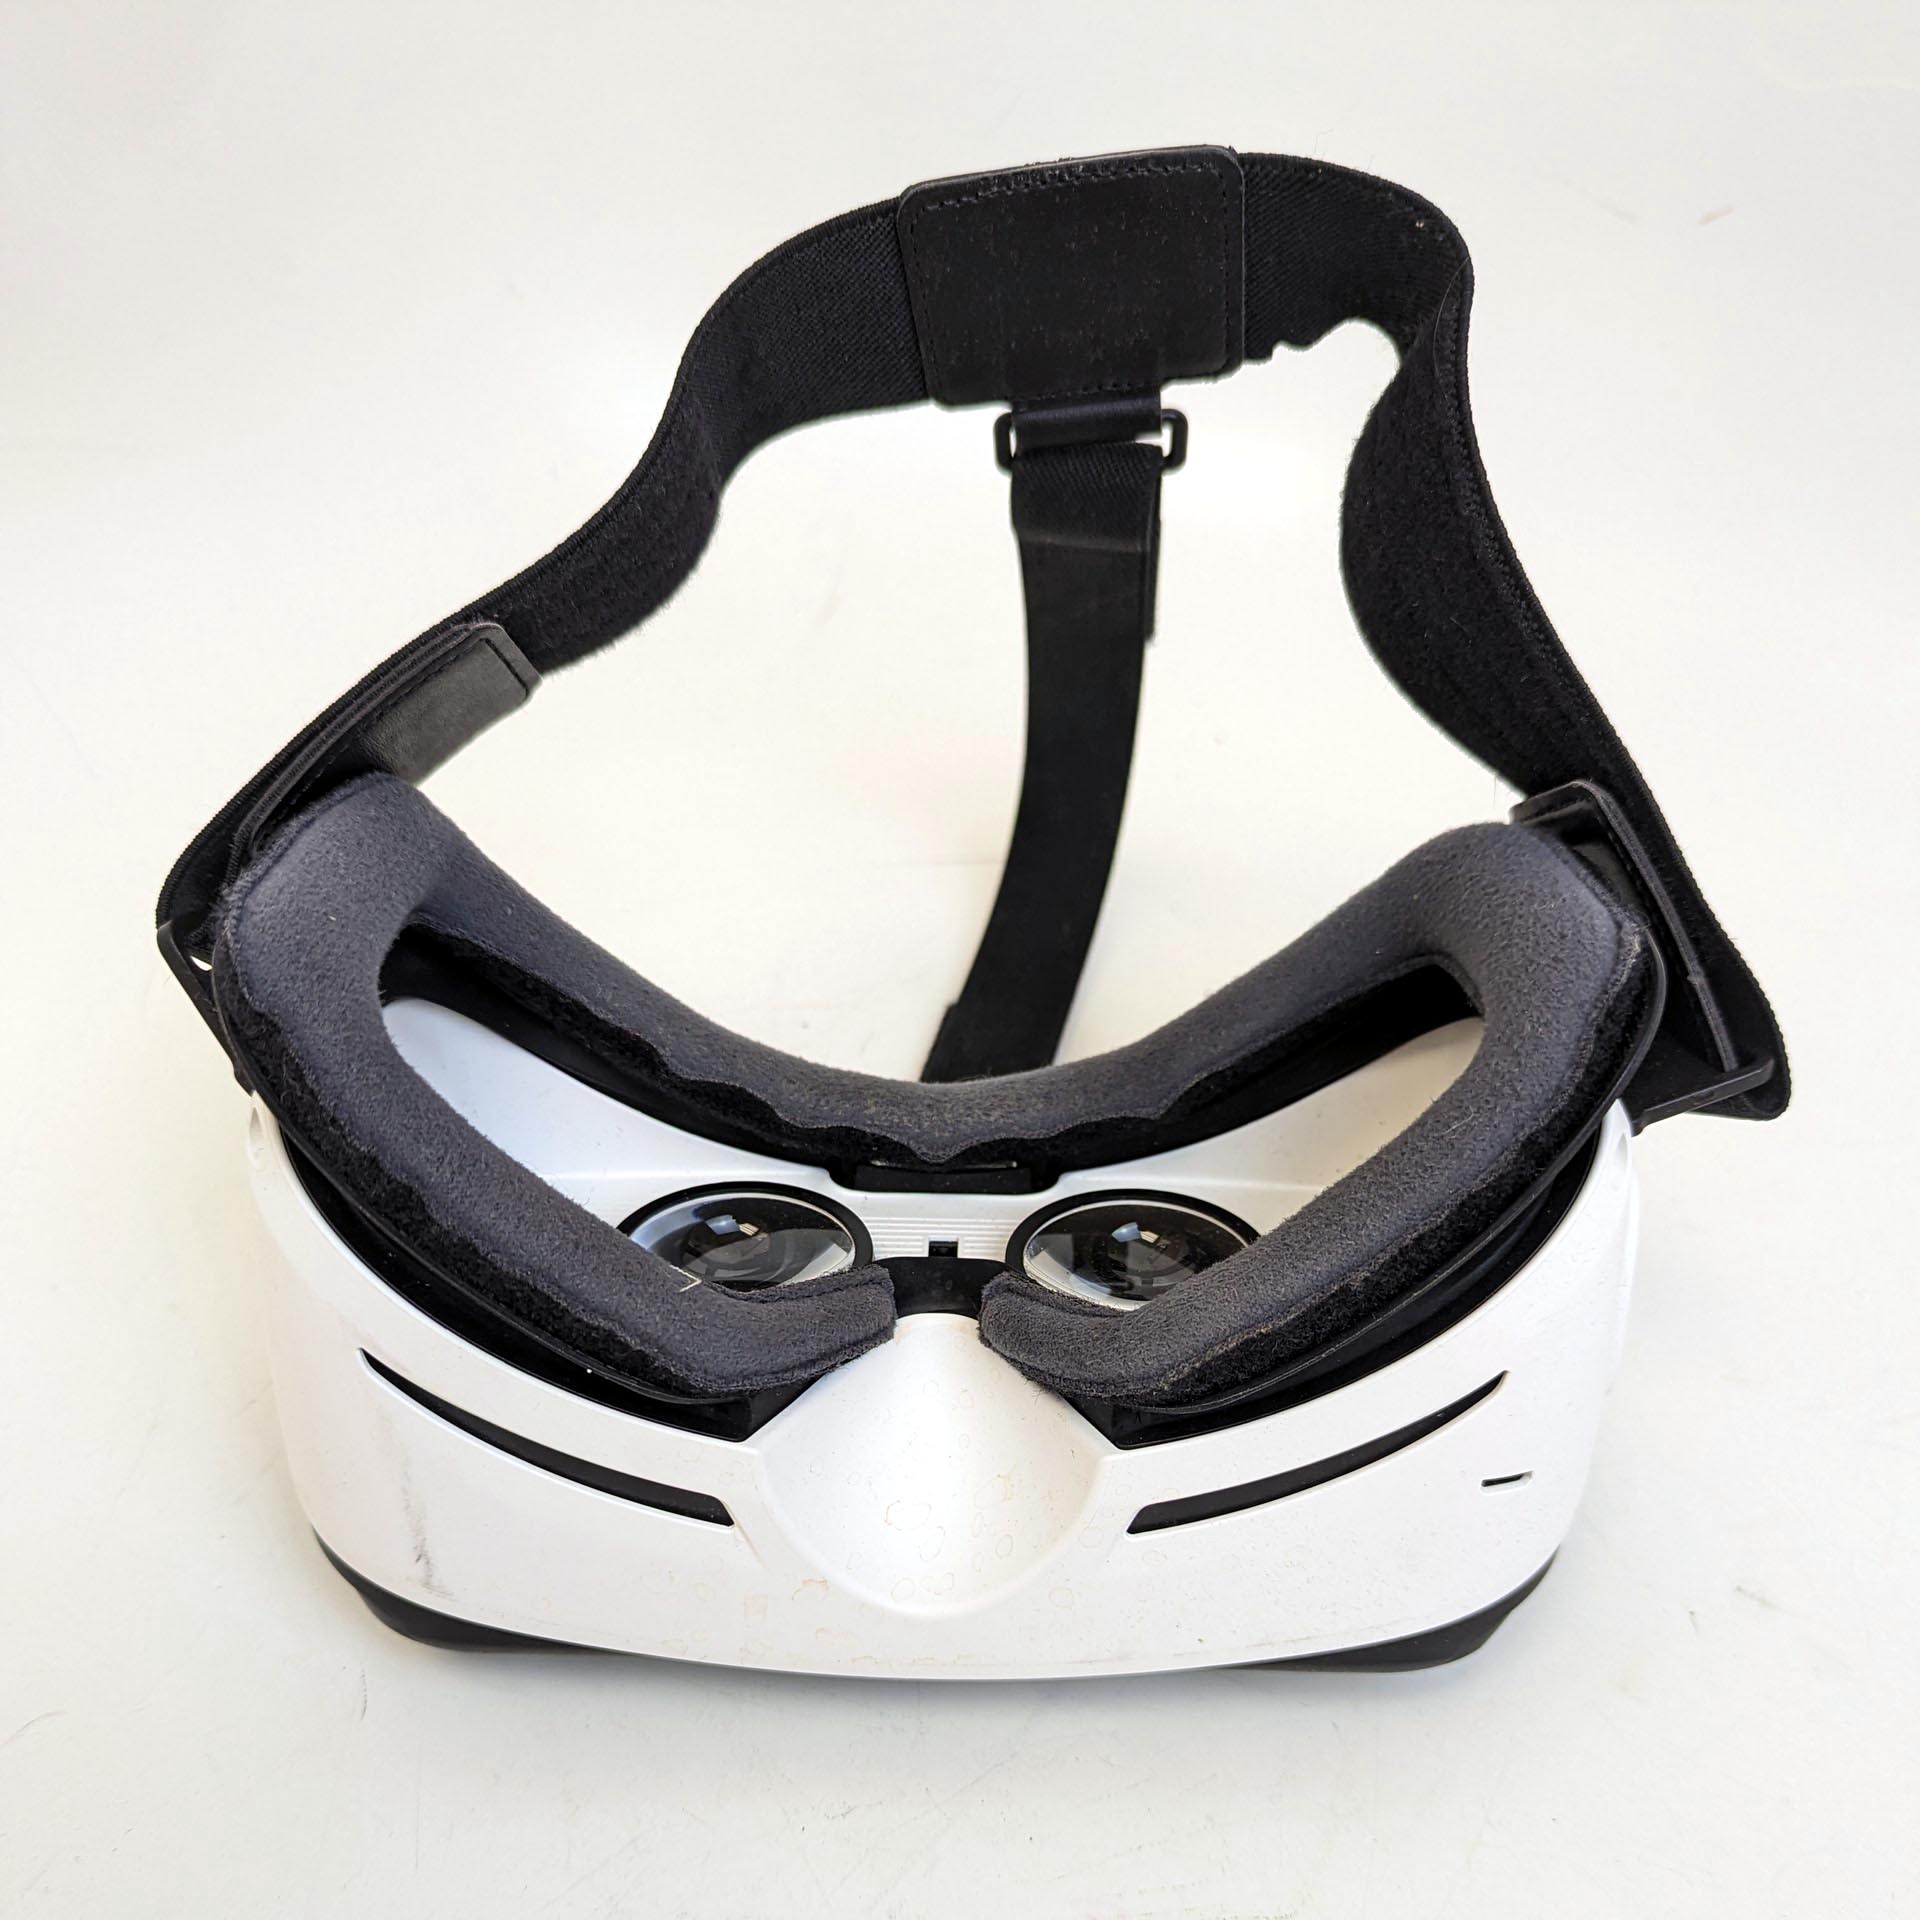 Samsung Gear VR Oculus Headseat SM-R322